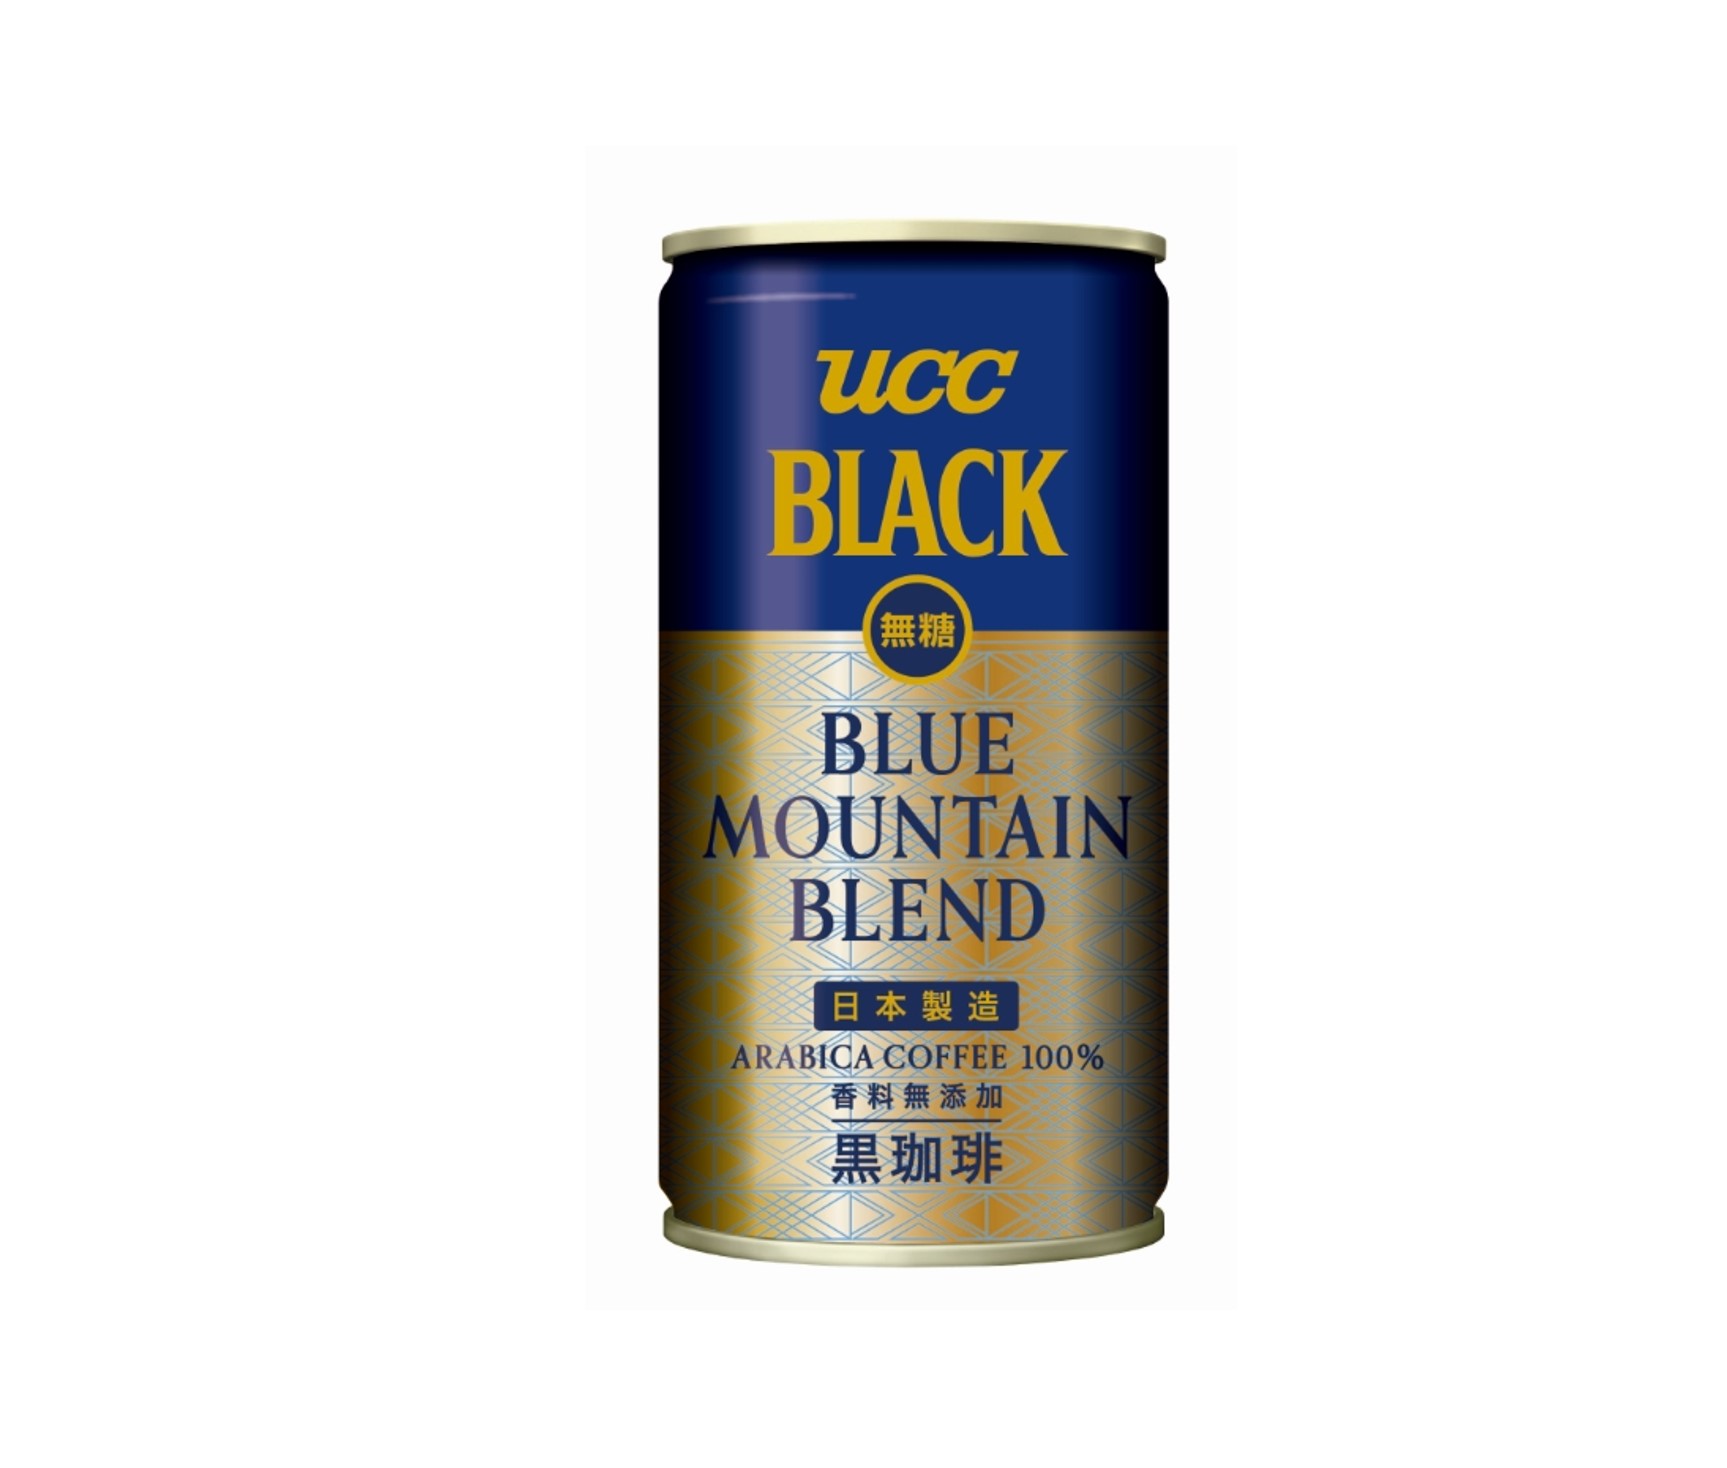 UCC BLACK 藍山綜合黑咖啡